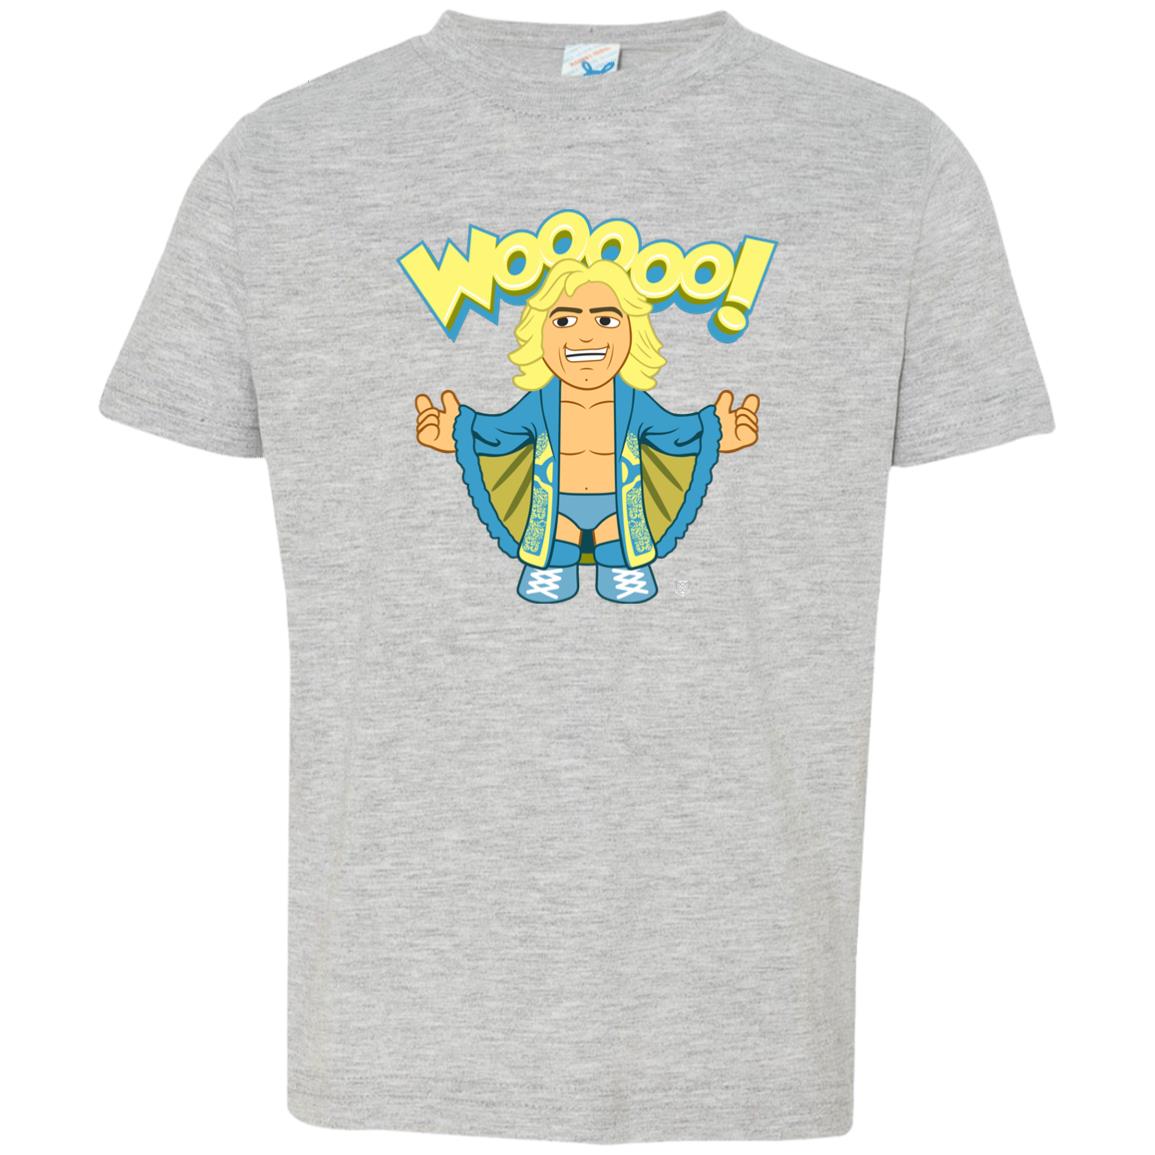 mini-ric Wooooo Man 3321 Toddler Jersey T-Shirt